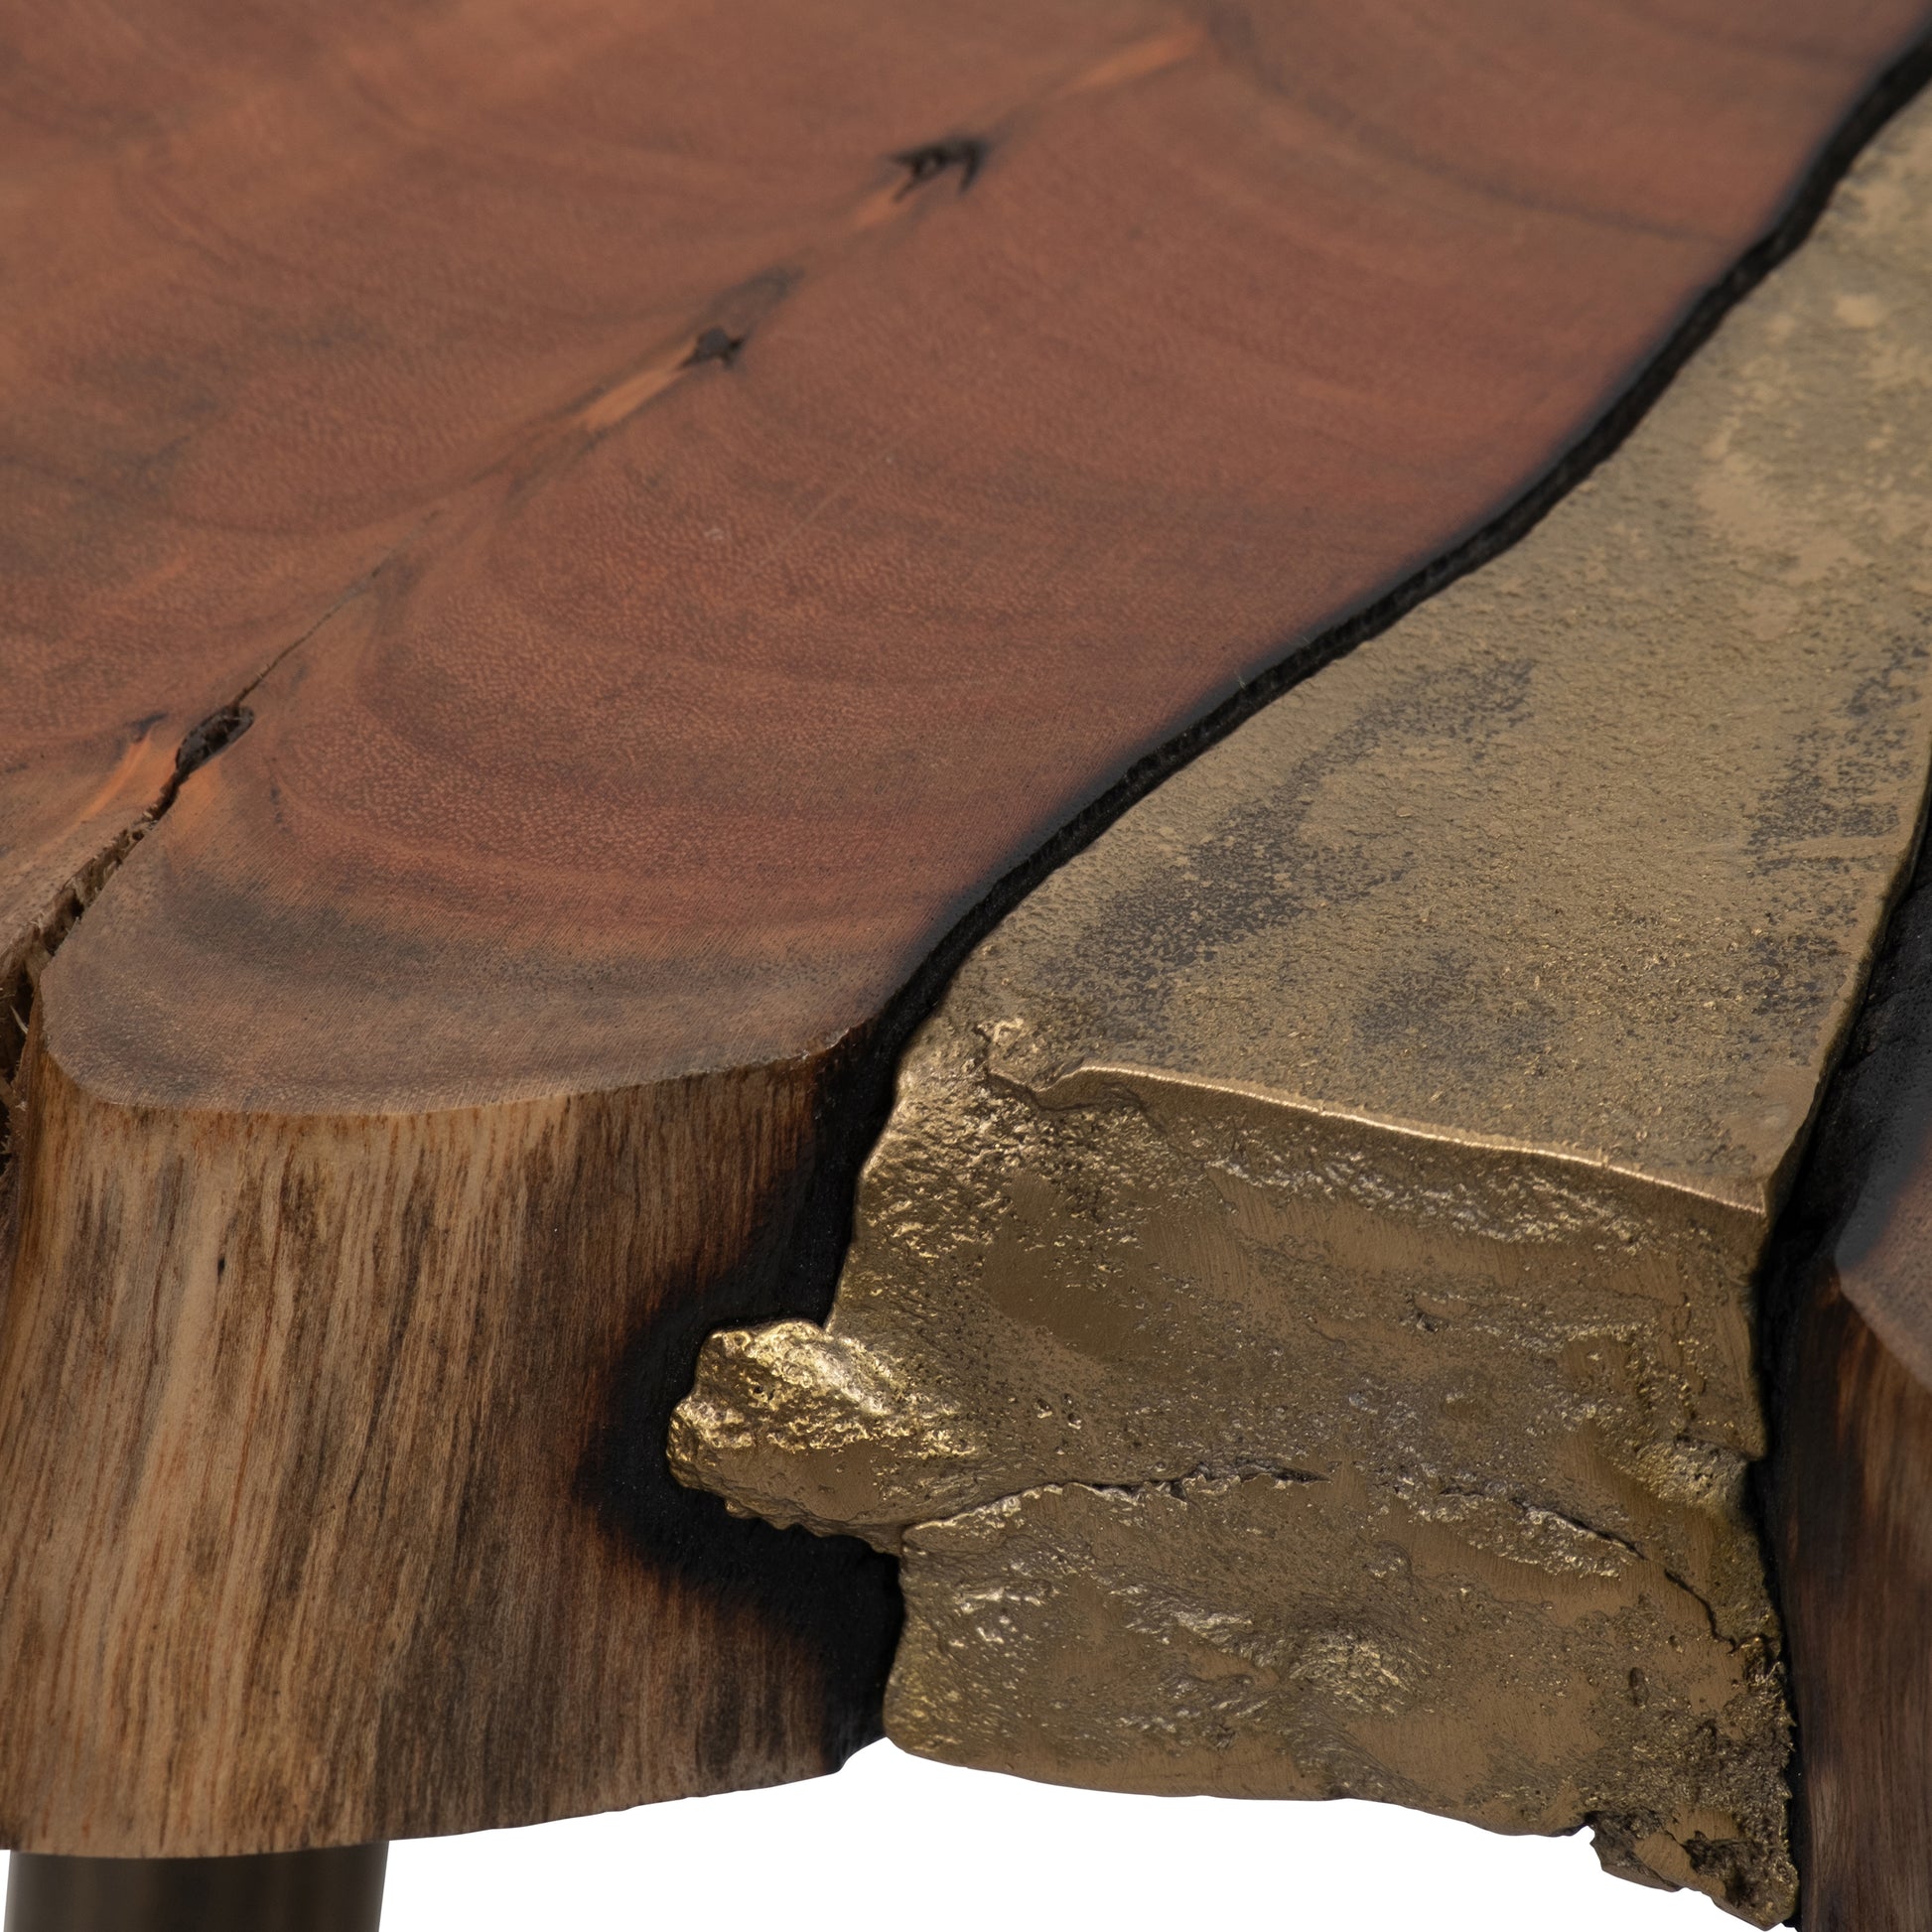 Wood, 22" Natural Wood Side Table, Brown Kd - Elite Maison